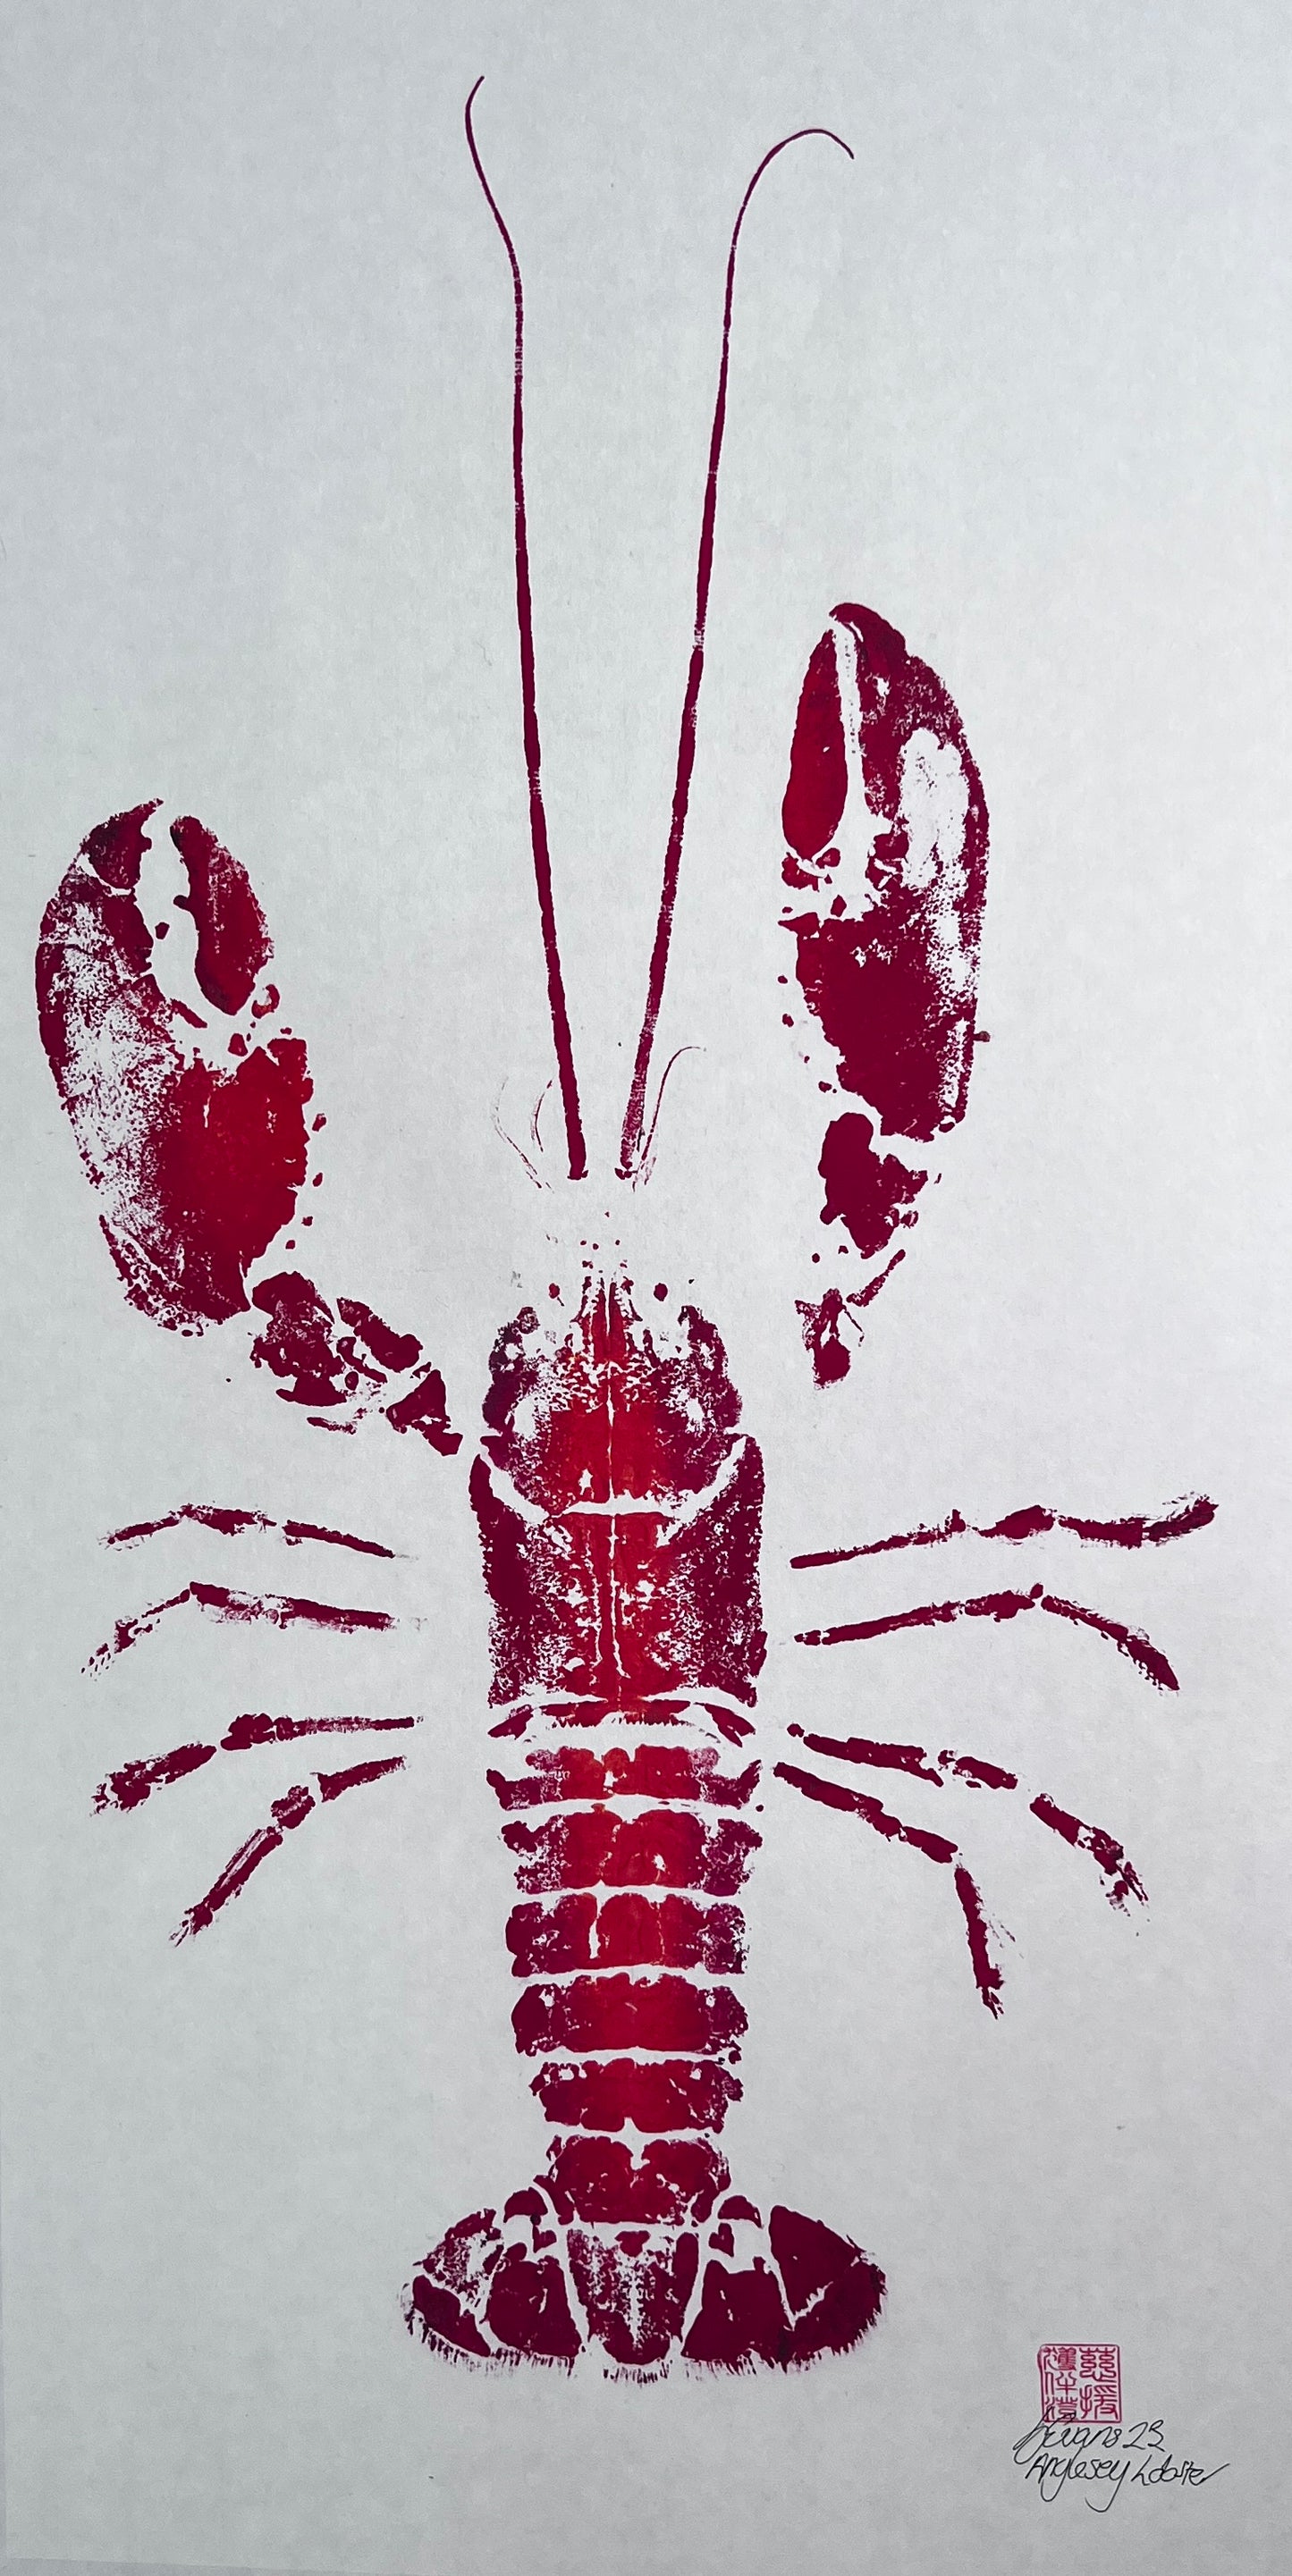 Menai Strait Lobster, Gyotaku Printed in Red ink